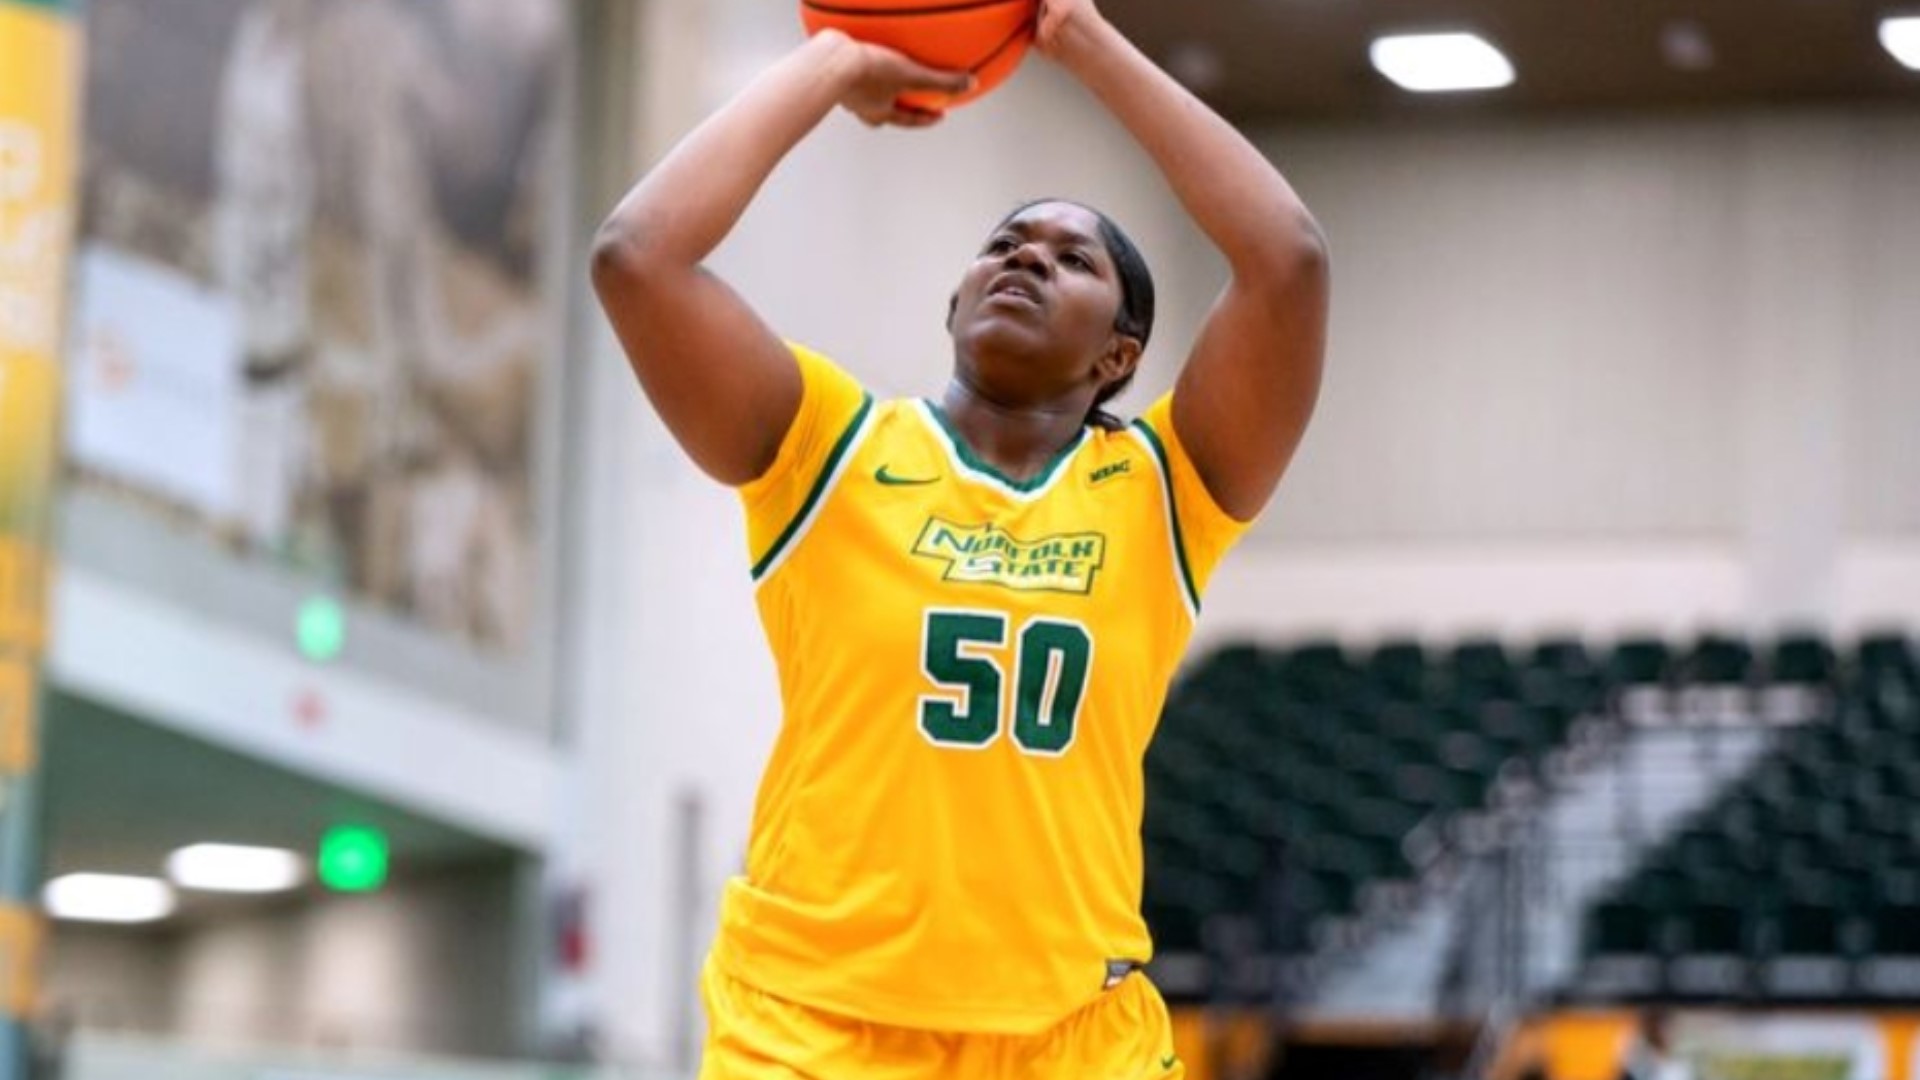 Kierra Wheeler scored 21 points to lead three Norfolk State University women's basketball players in double figures.